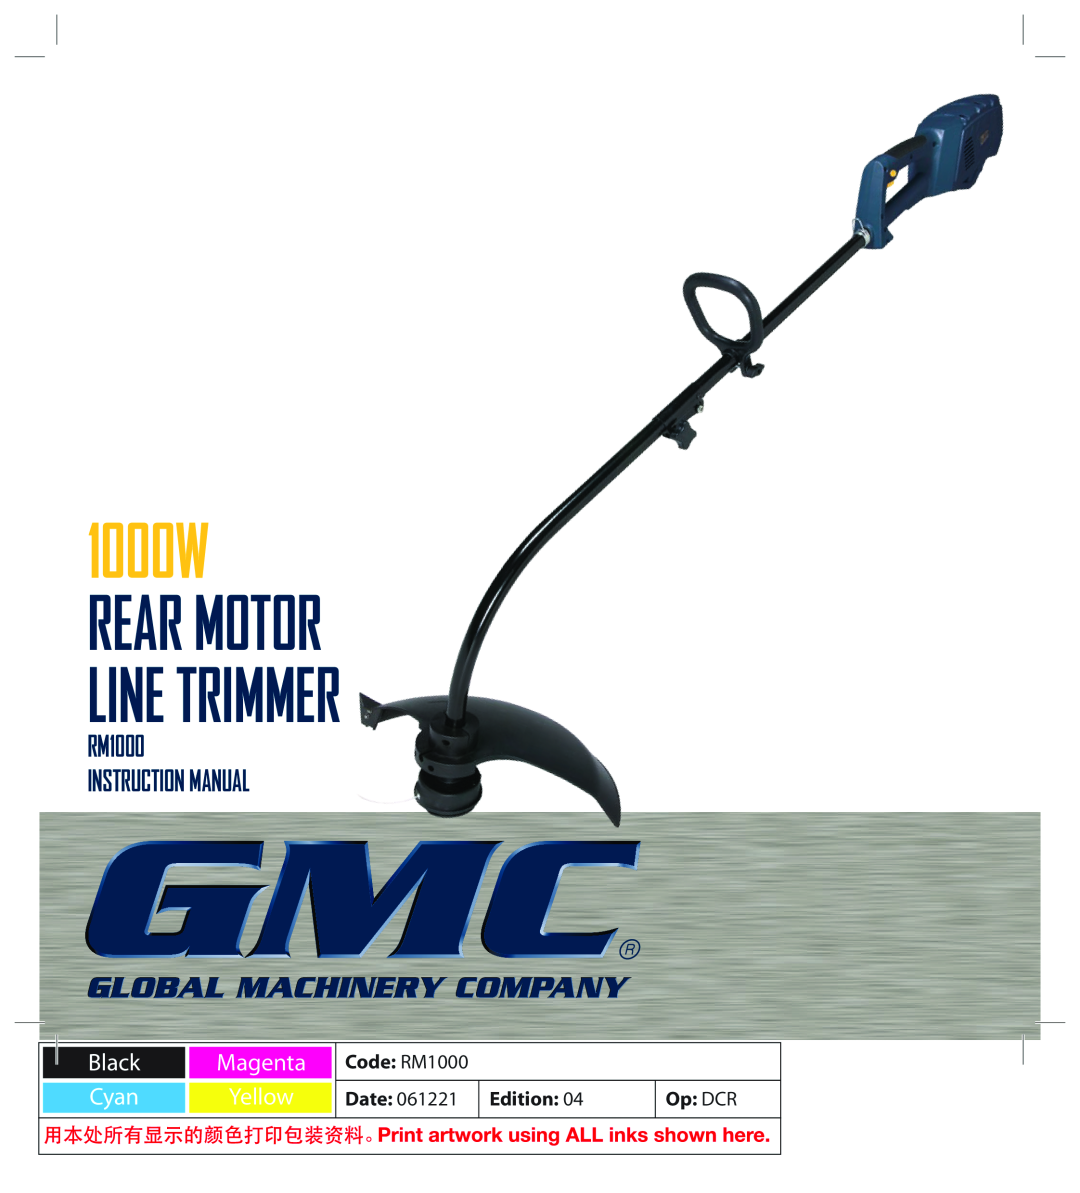 Global Machinery Company RM1000 instruction manual 1000W REAR MOTOR LINE TRIMMER, Black Magenta Cyan Yellow 